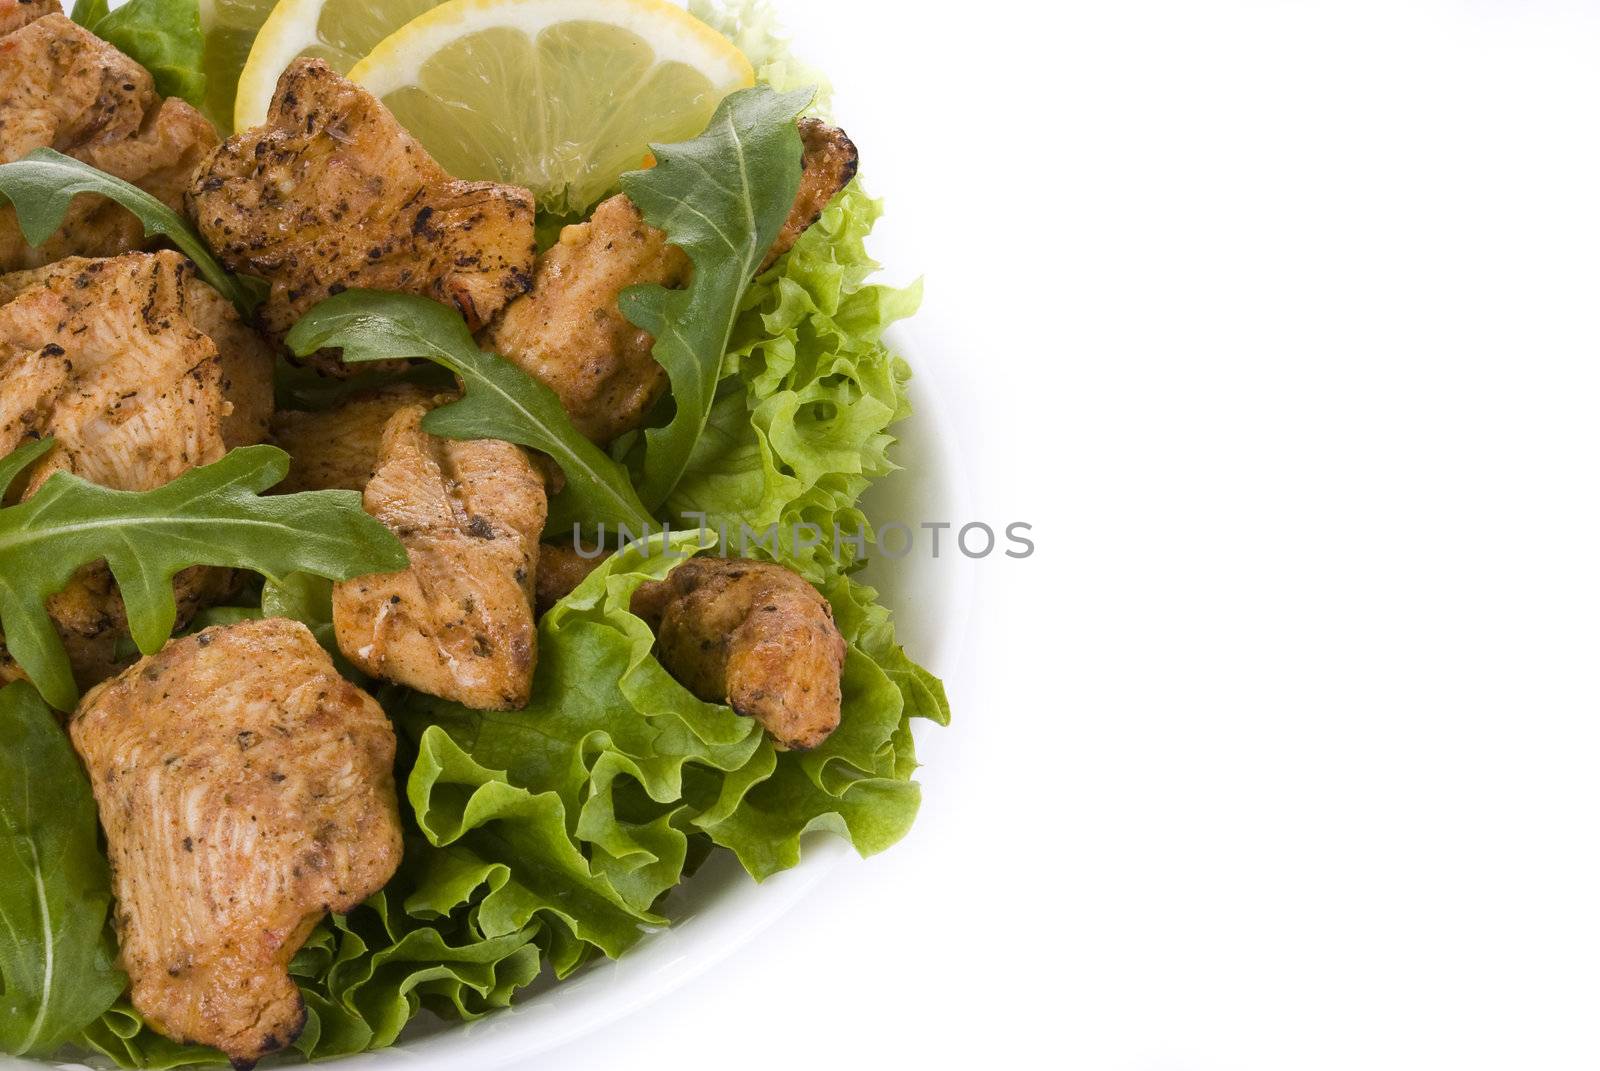 Chicken salad by caldix